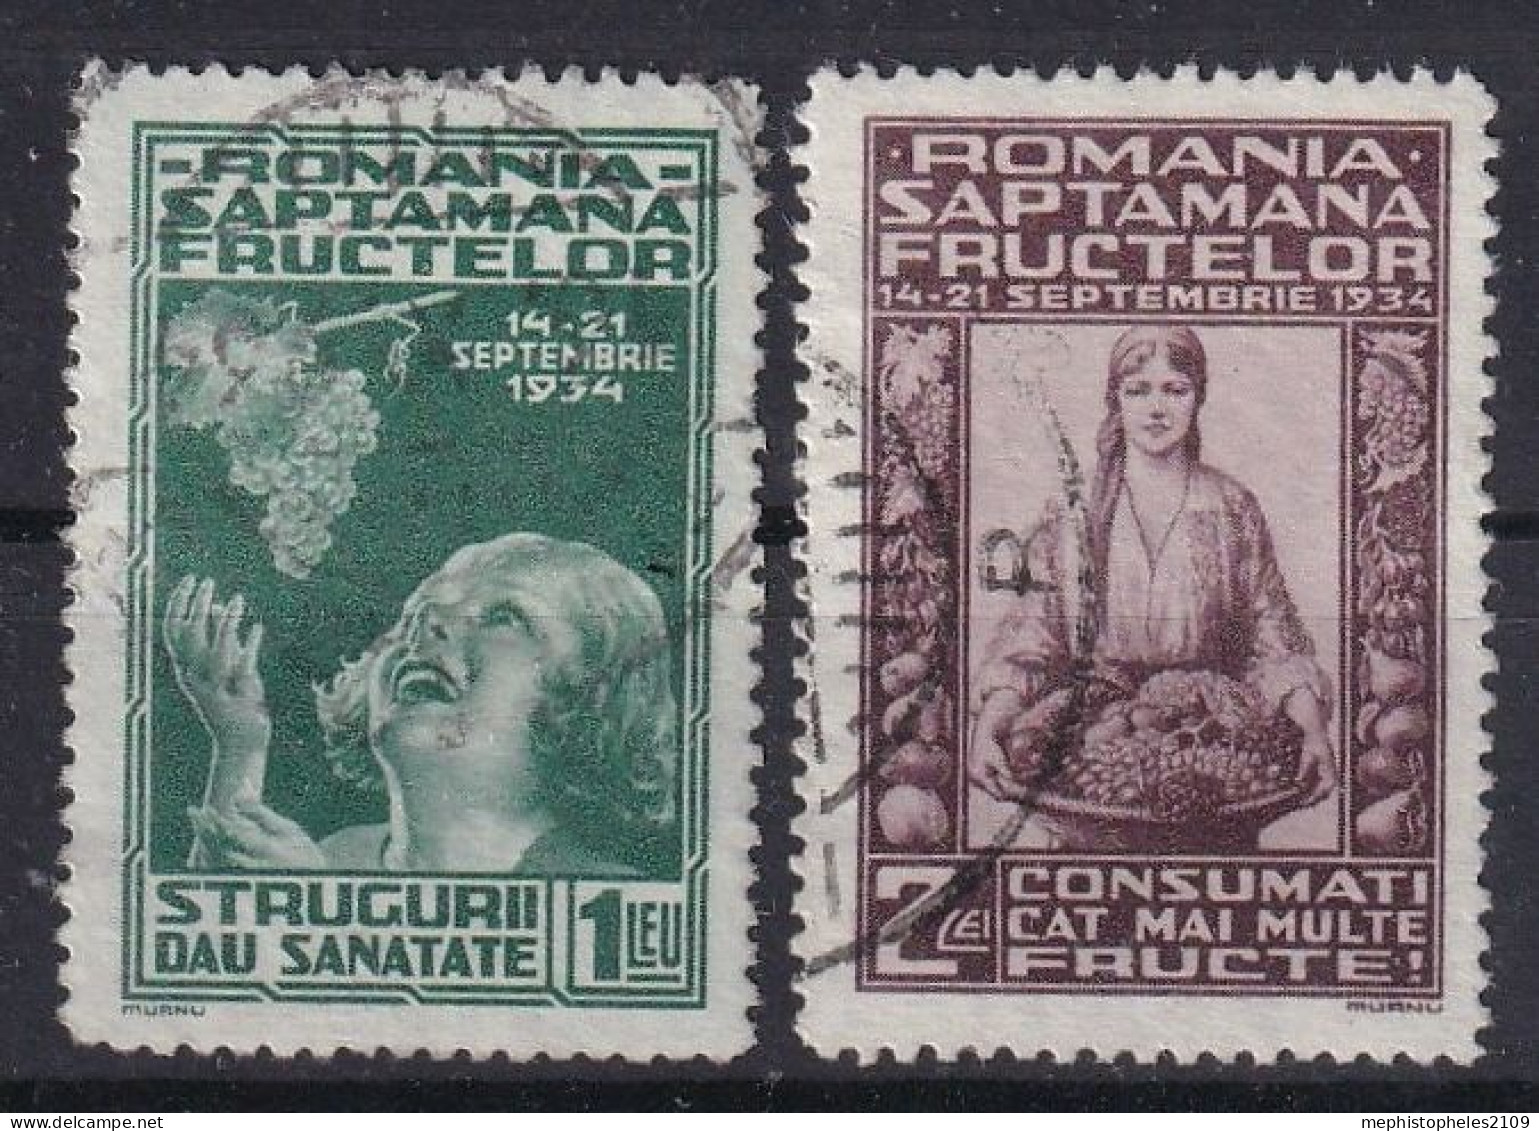 ROMANIA 1934 - MLH - Sc# 440, 441 - Nuovi